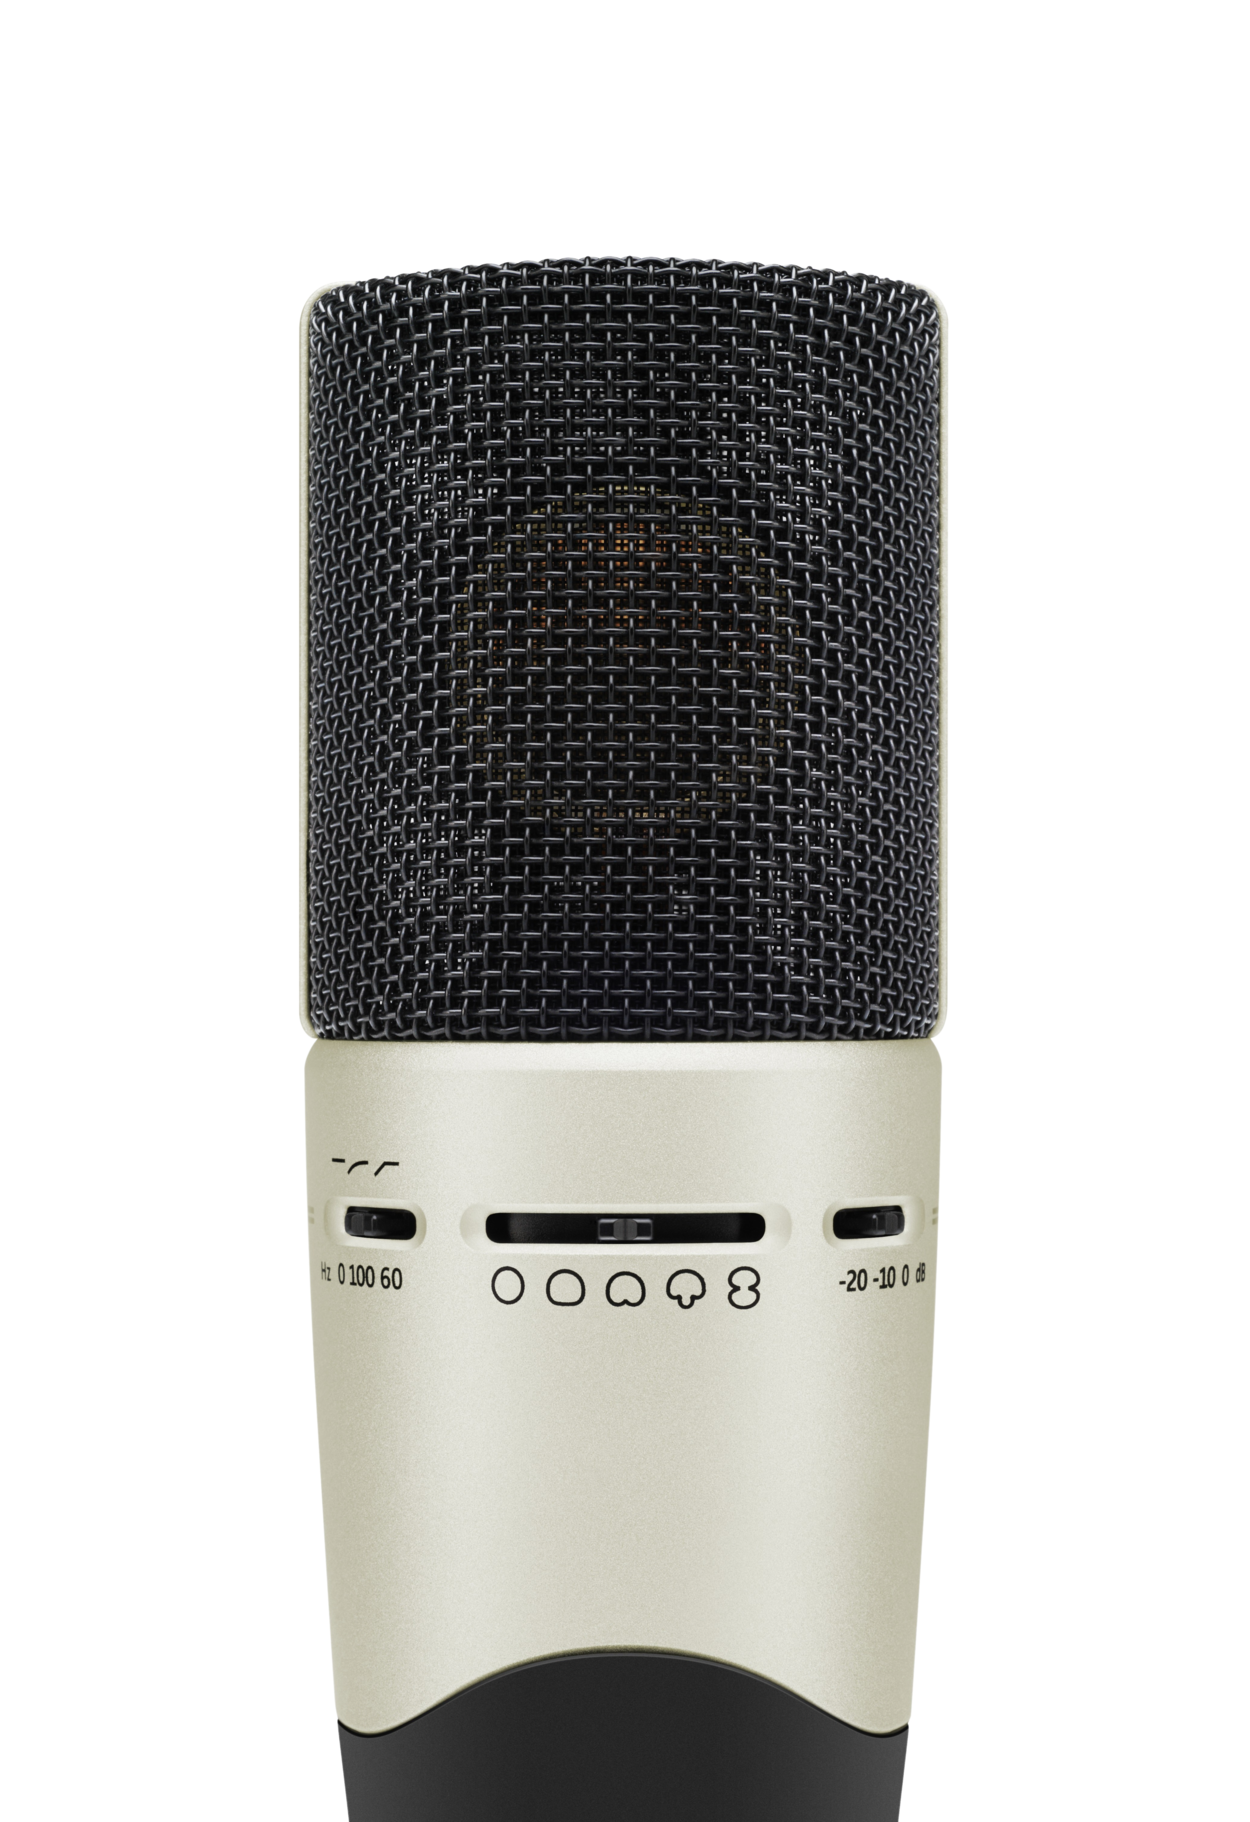 Sennheiser MK8 Large Diaphragm Multipattern Condenser Microphone